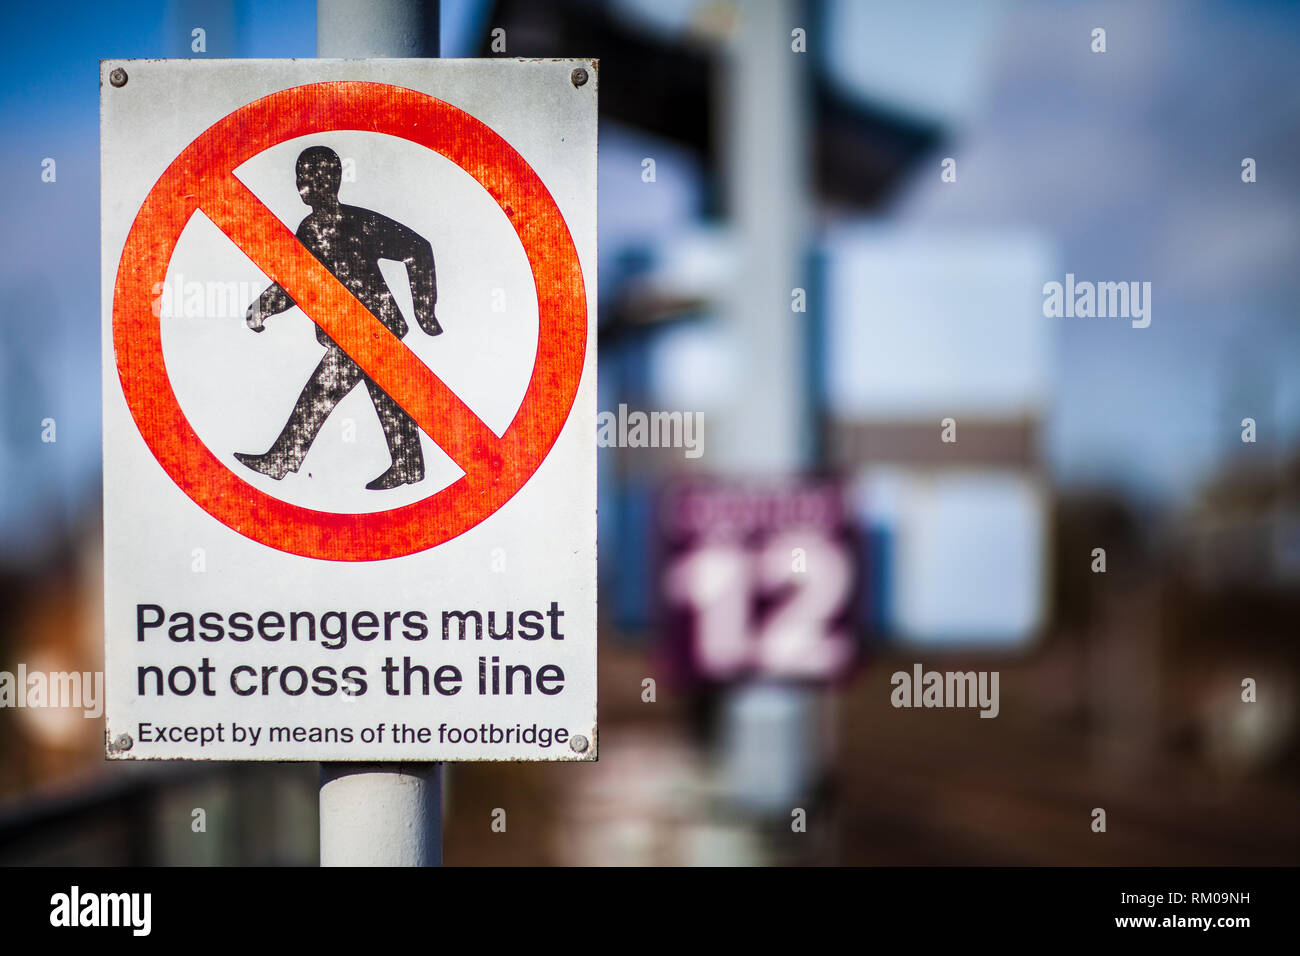 Railway Warning Sign - Passengers must not cross the line Stock Photo